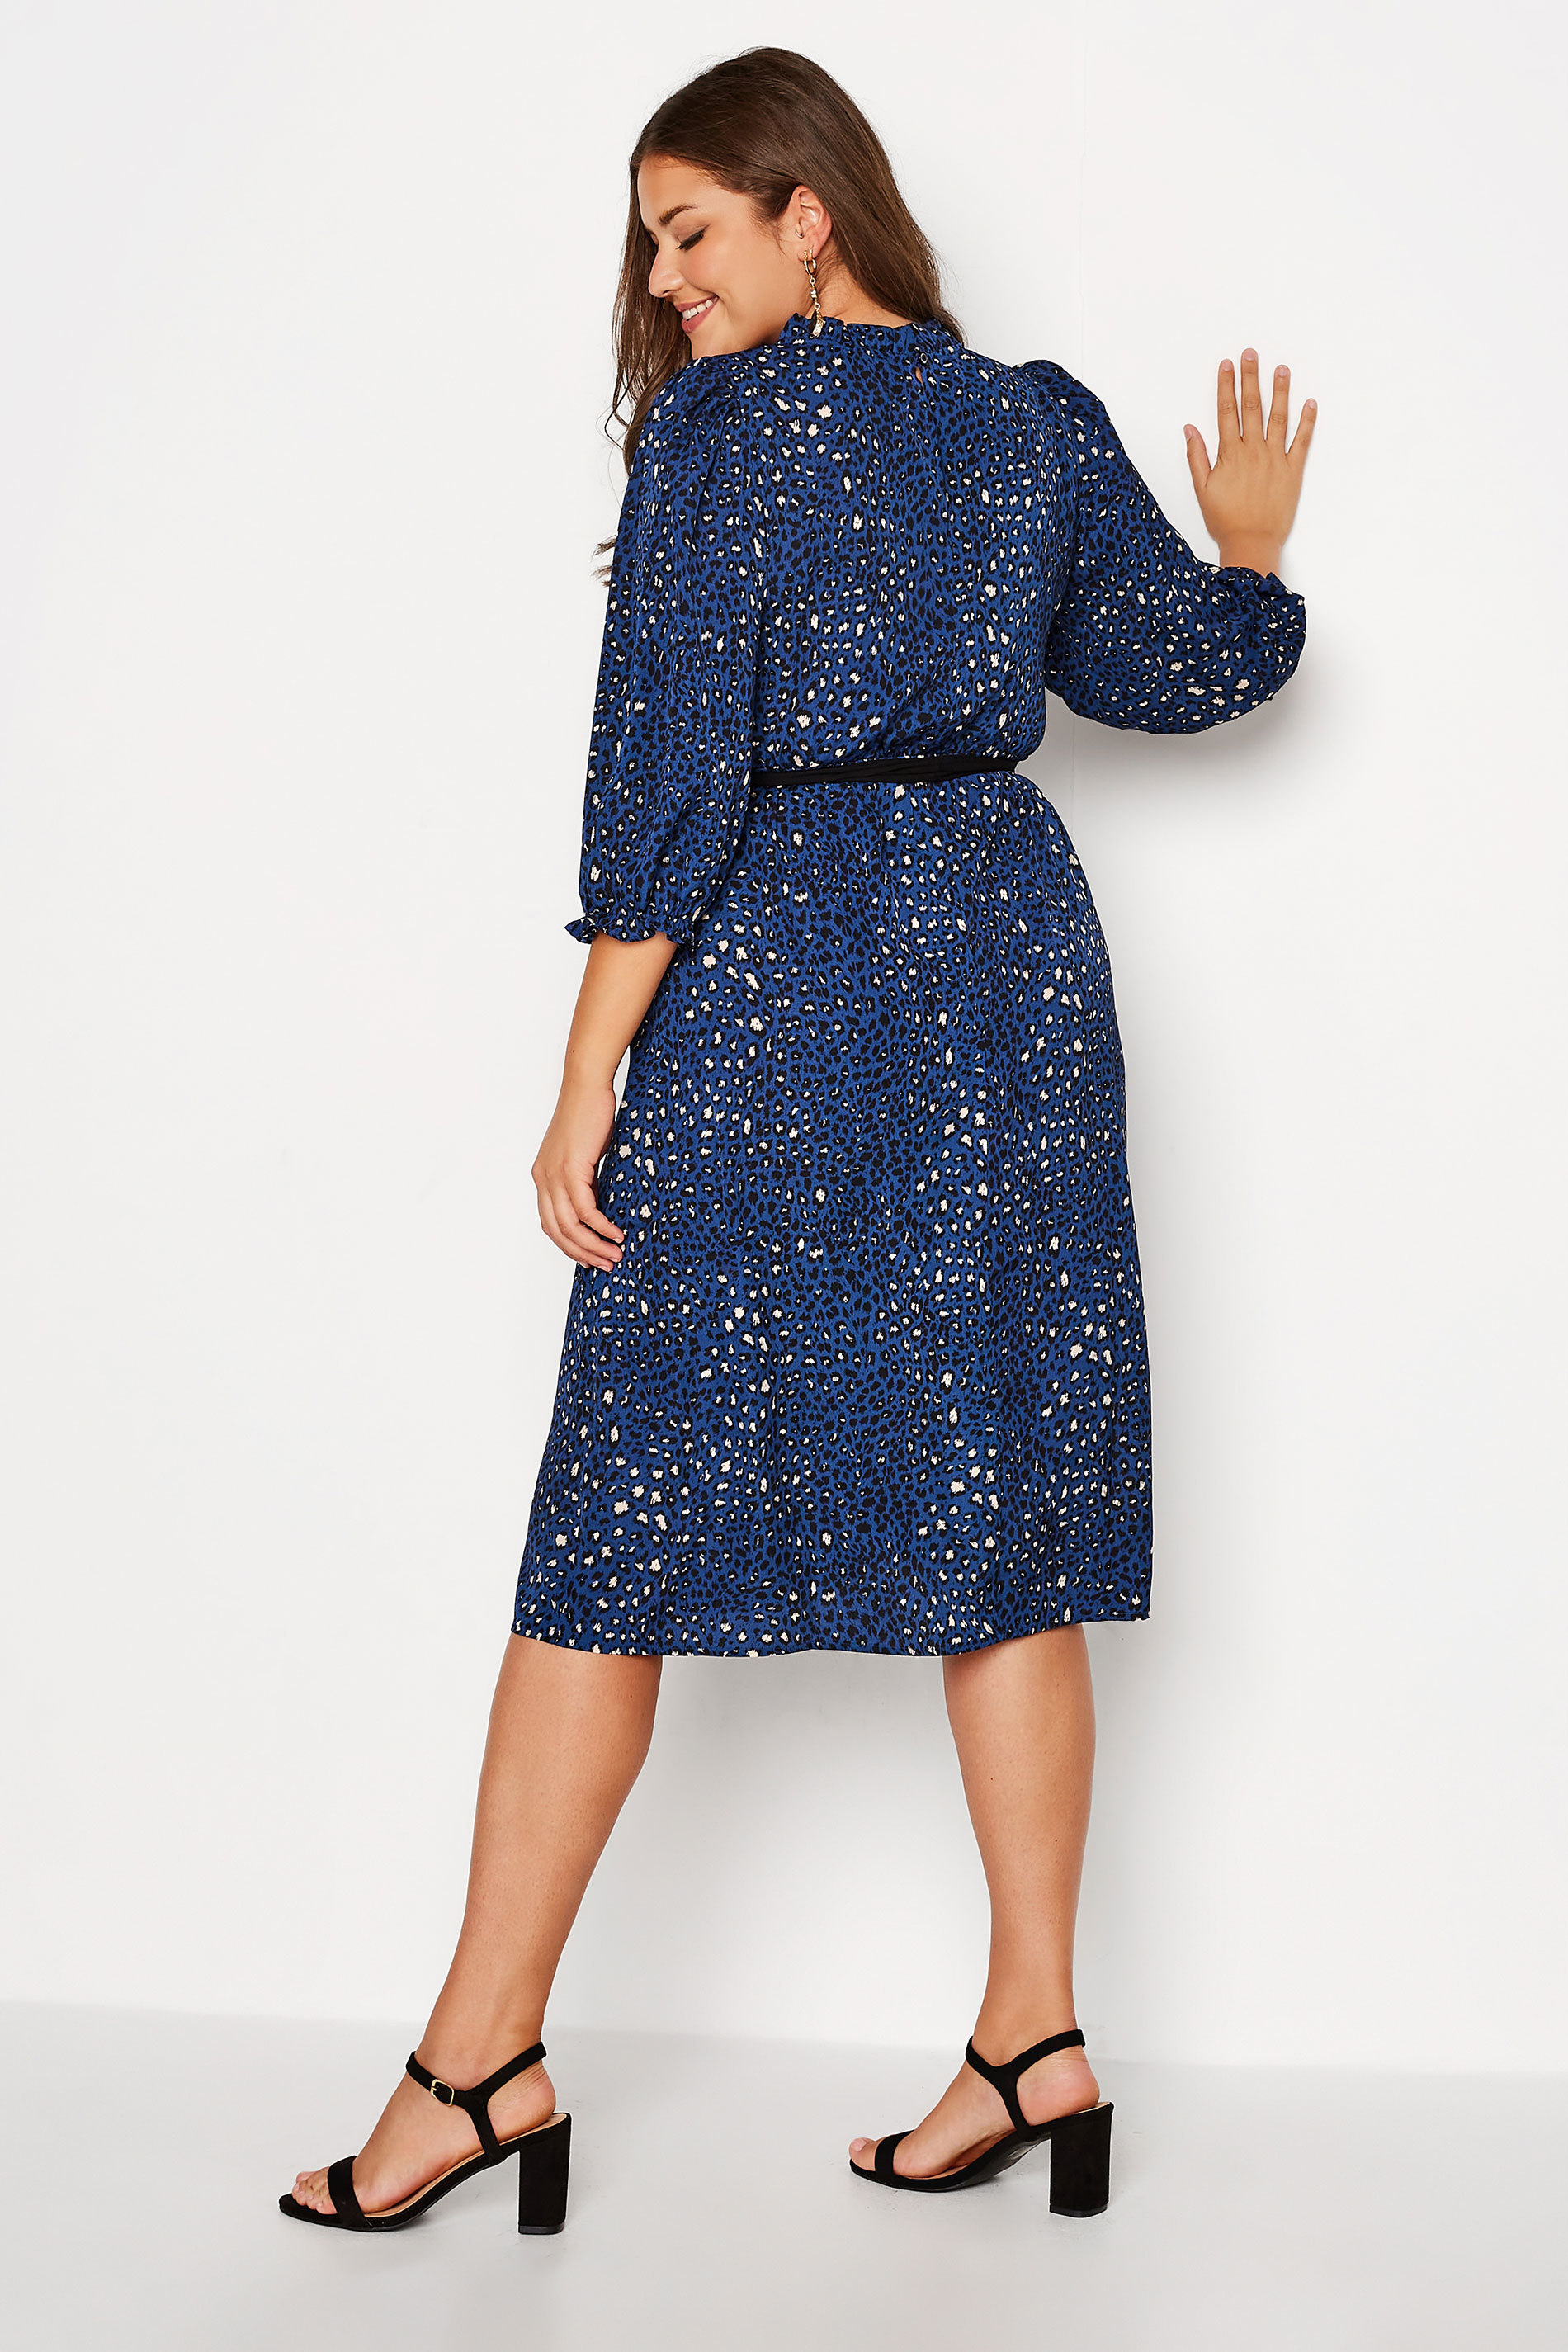 YOURS LONDON Plus Size Blue Animal Print Ruffle Neck Dress | Yours Clothing 3